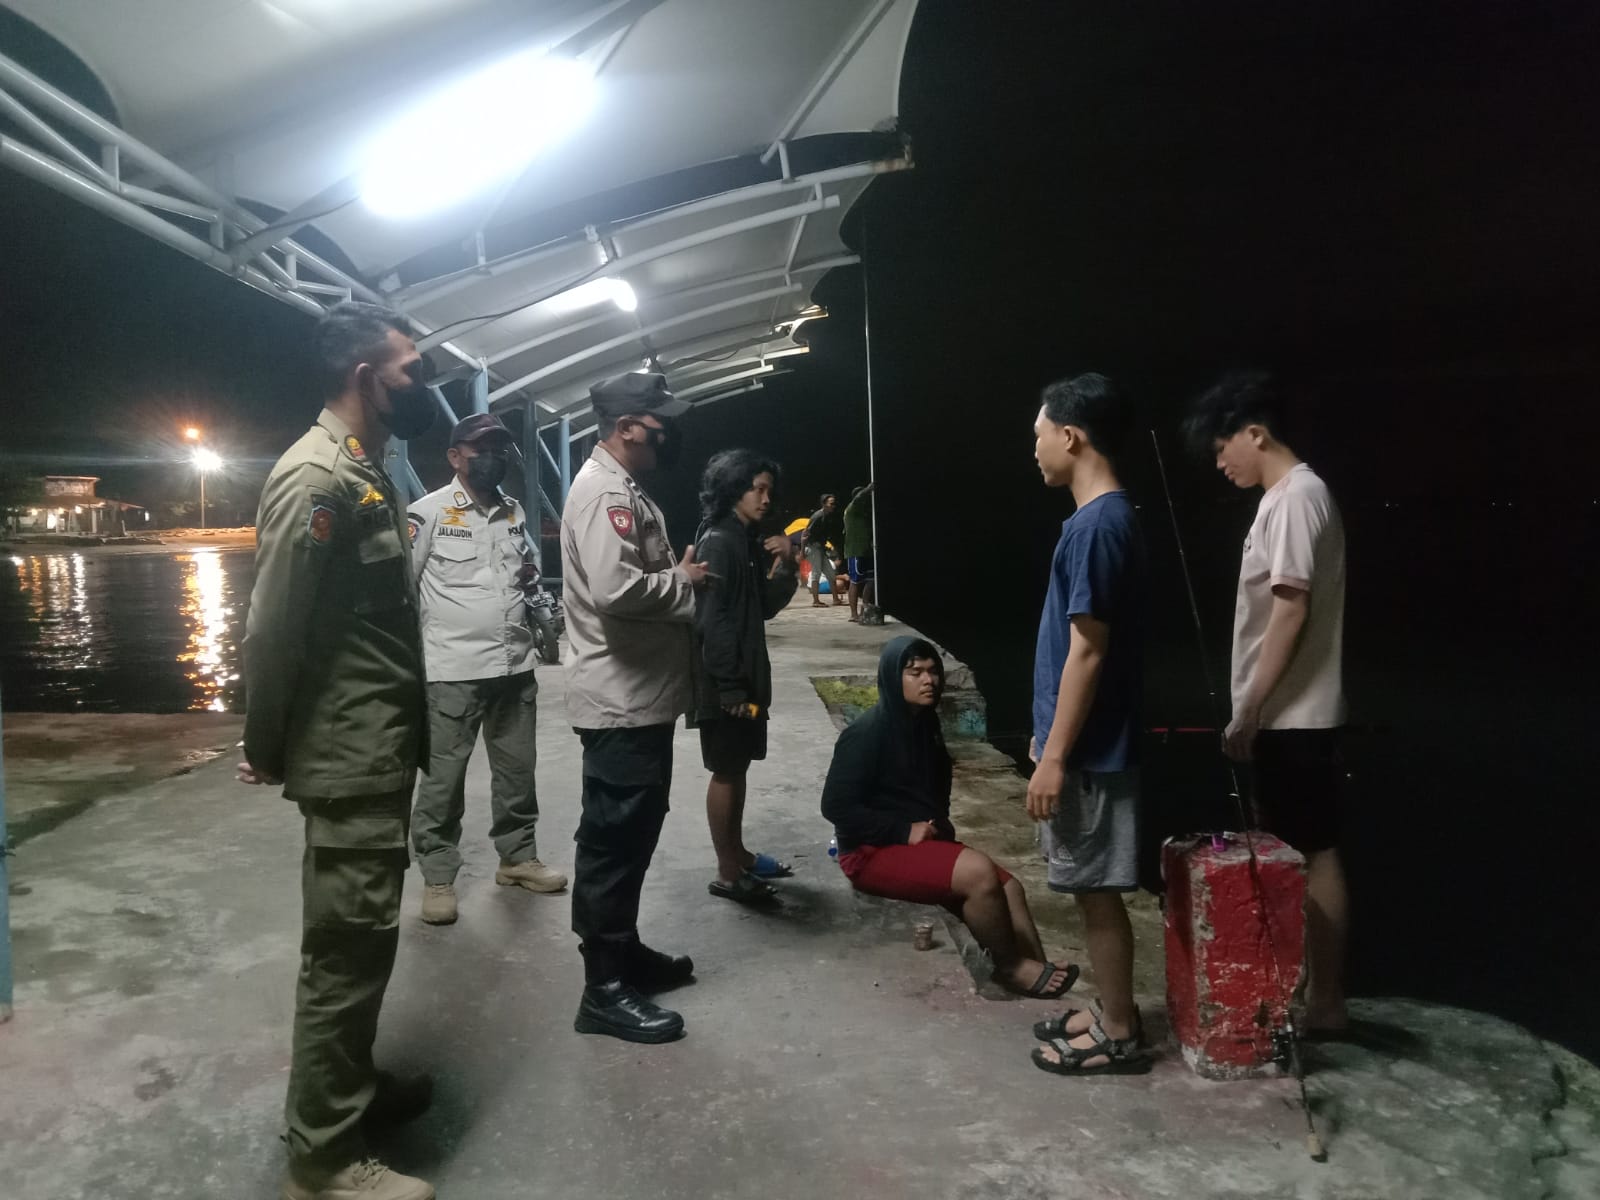 Patroli Malam Polsek Kepulauan Seribu Selatan Sebuah Pelayanan Prima untuk Ciptakan Sitkamtibmas Kondusif